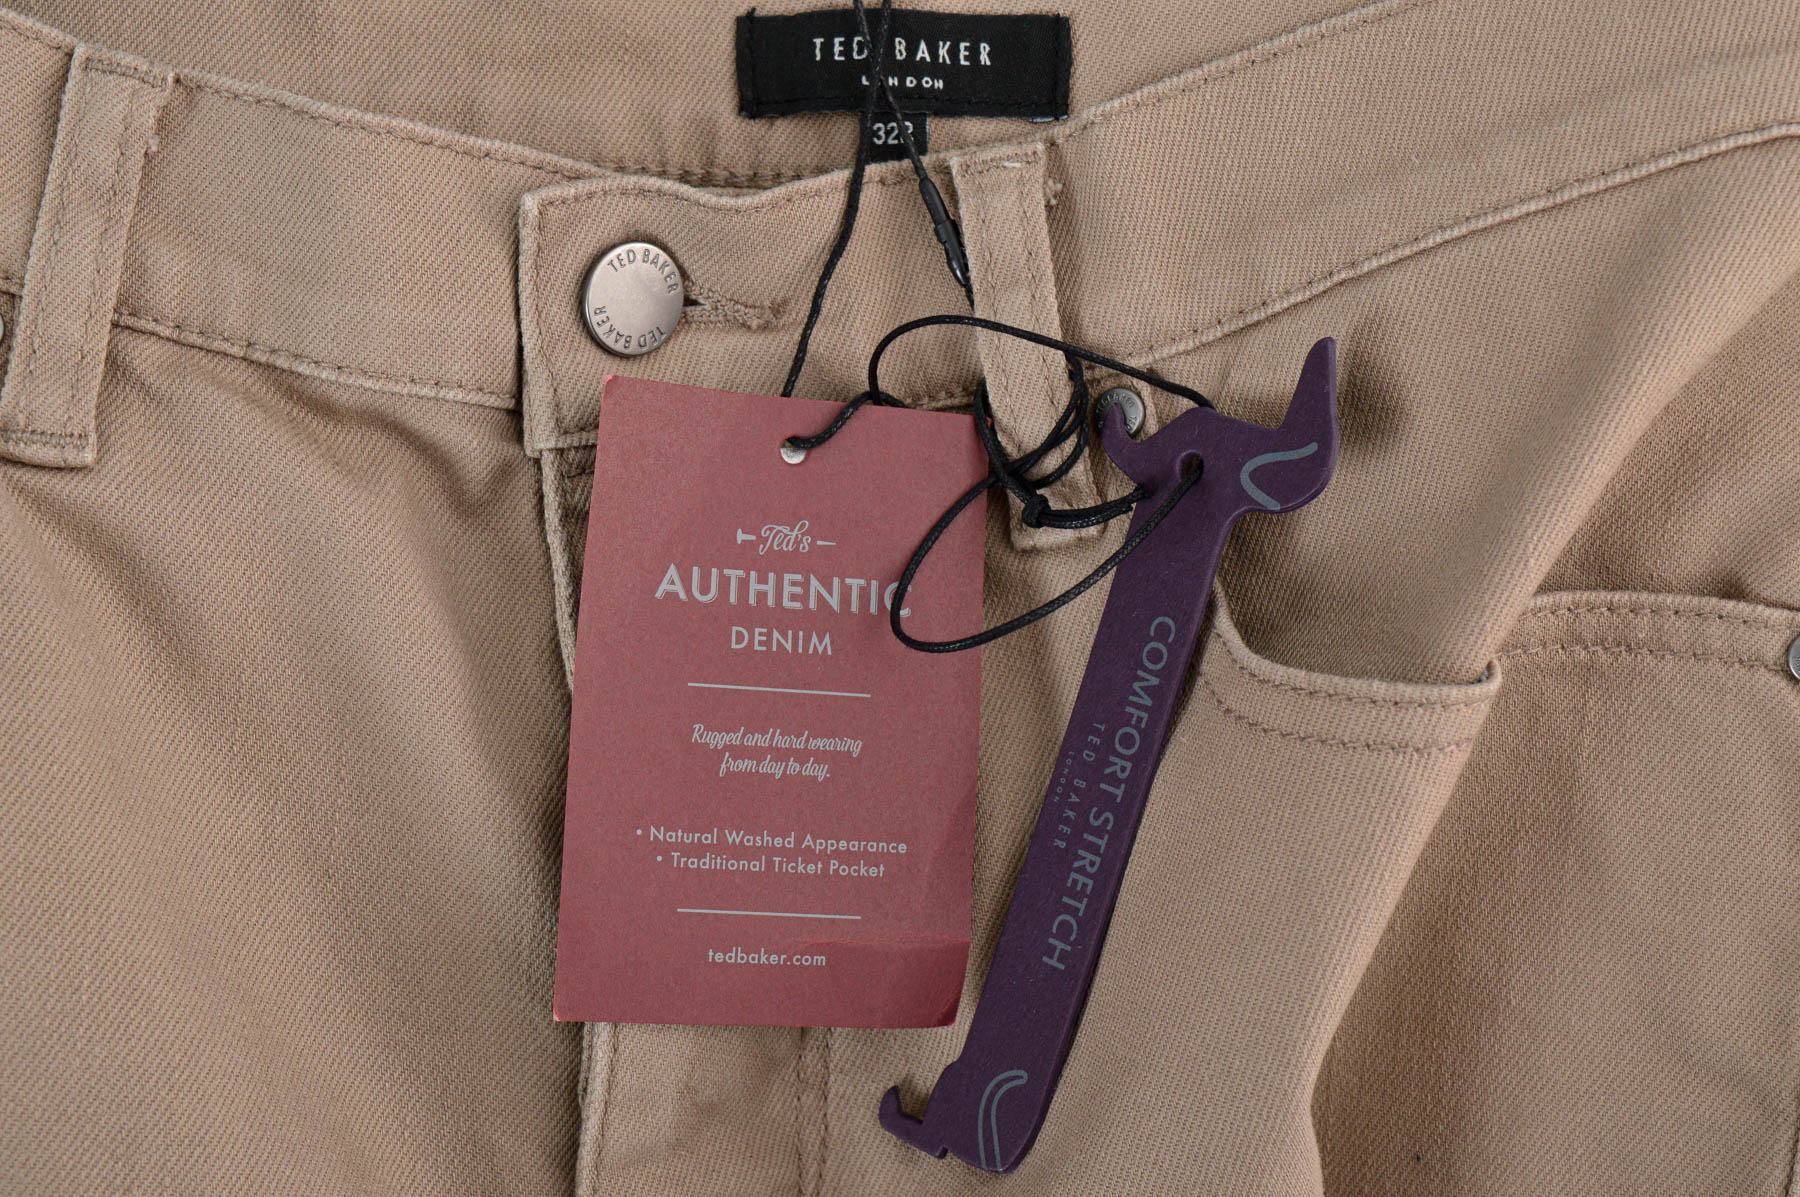 Pantalon pentru bărbați - TED BAKER - 2